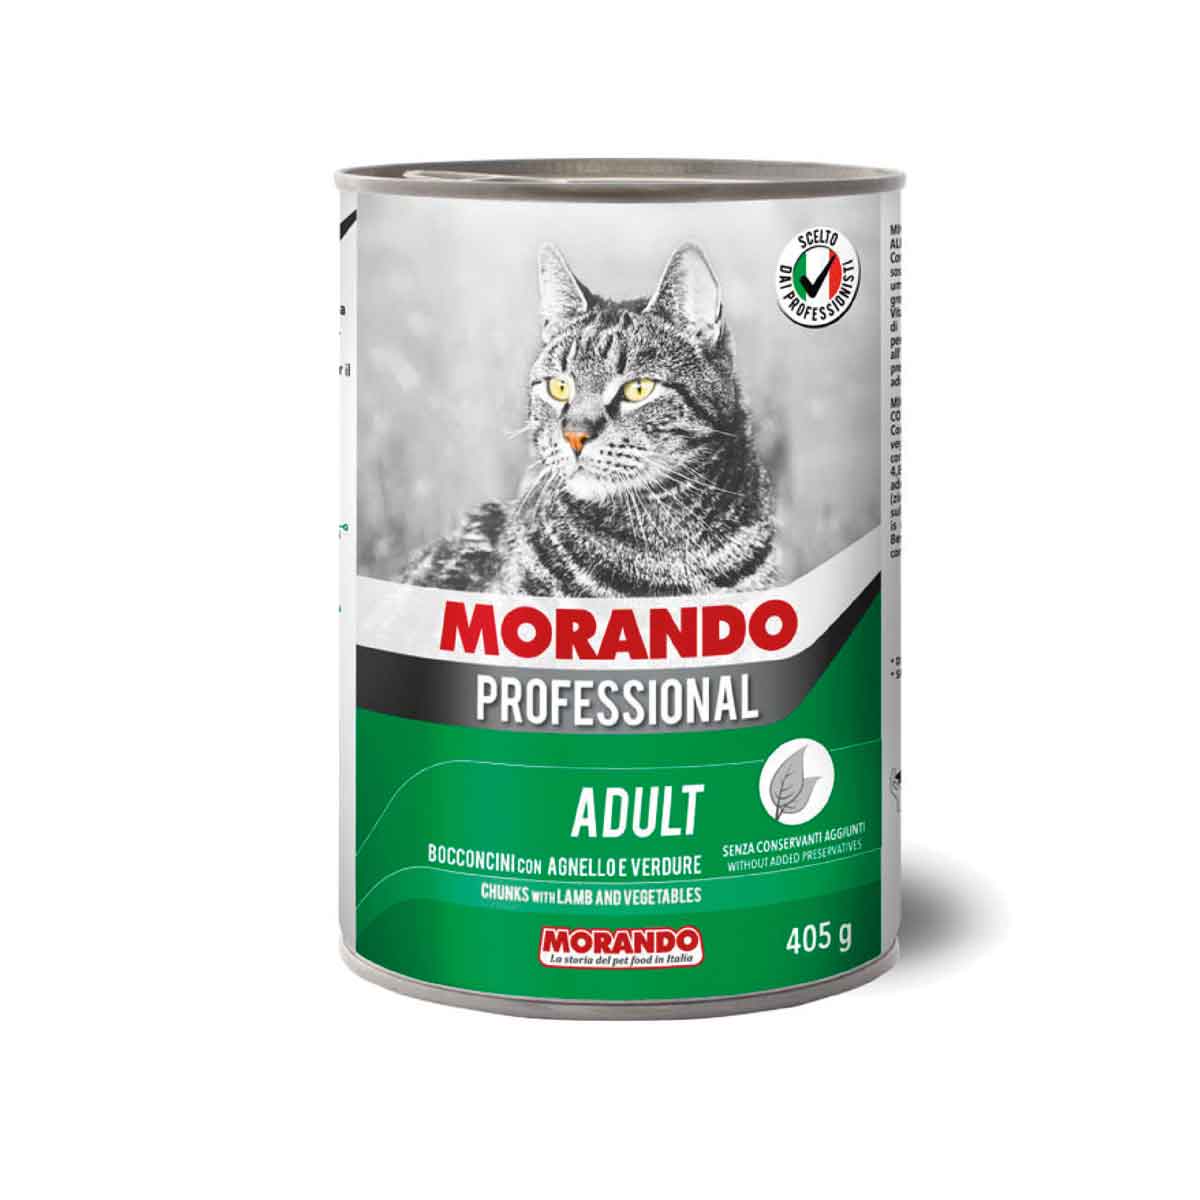 Morando Professional Cat 405g